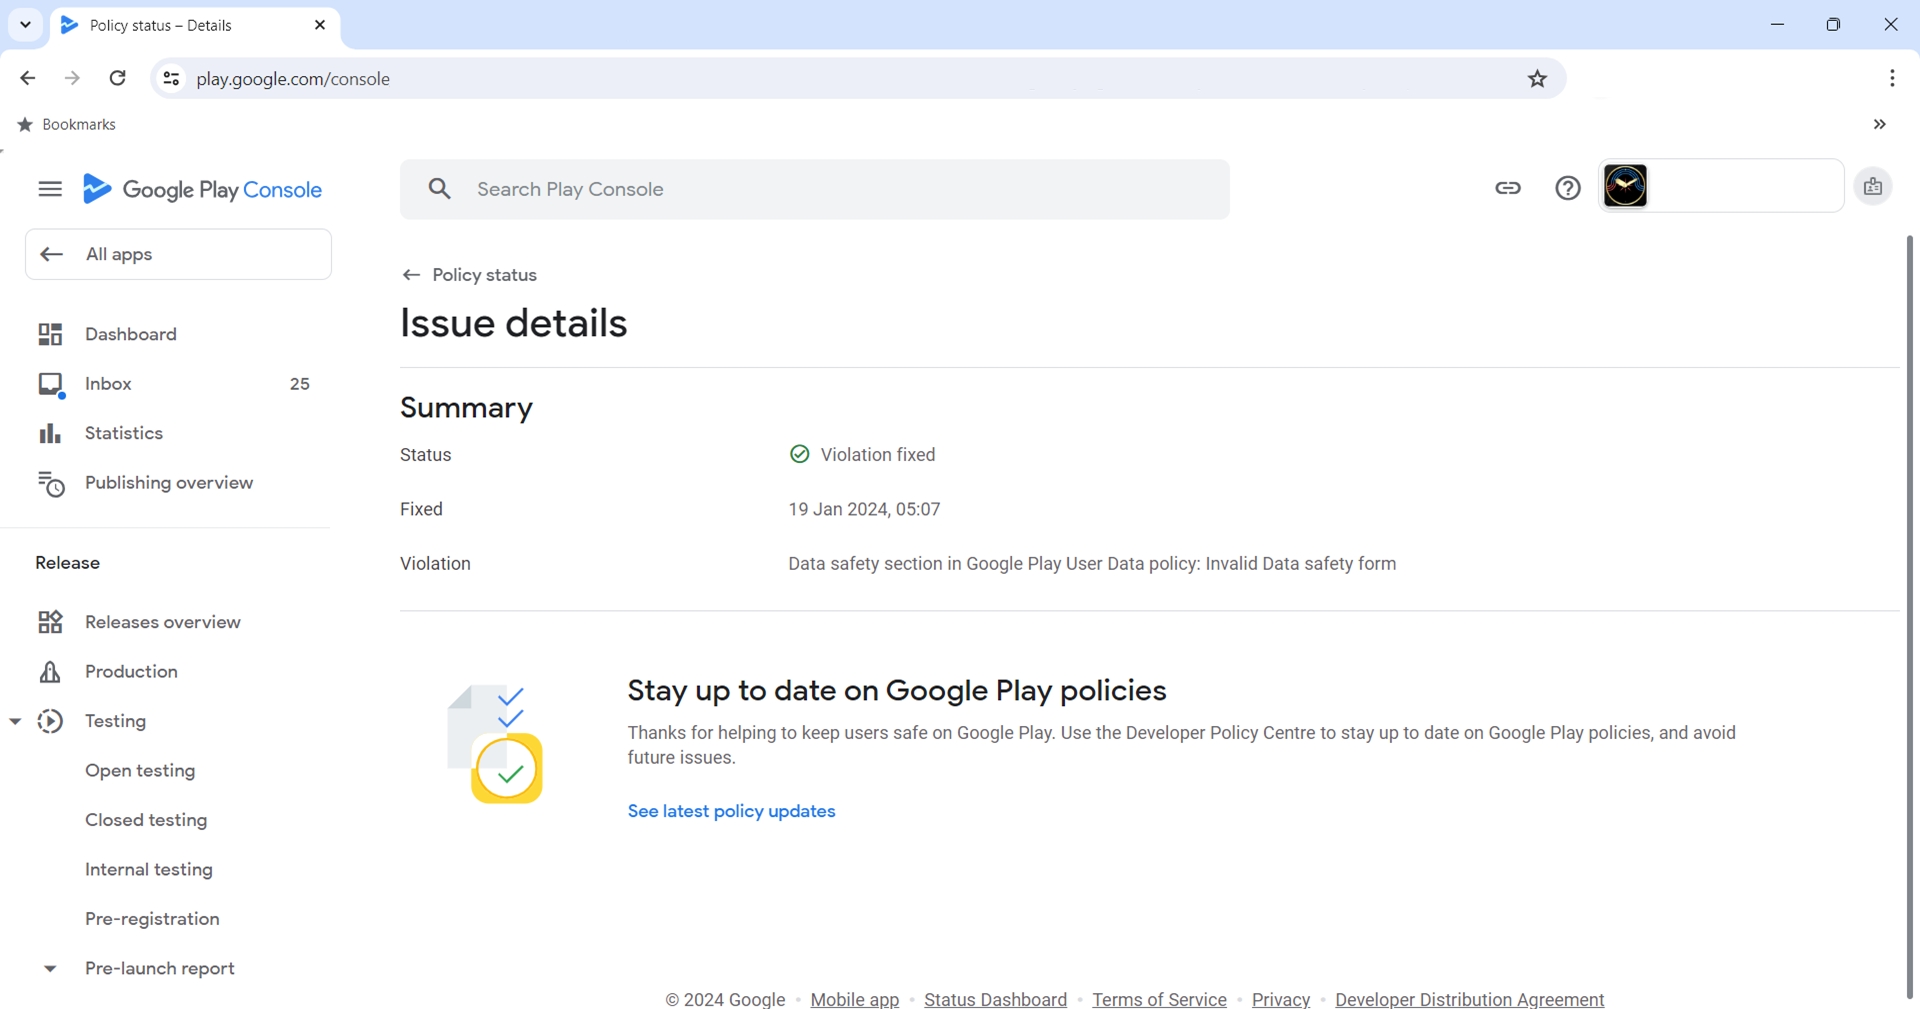 RevenueCat - Google Play Policies - Inbox Issue Details